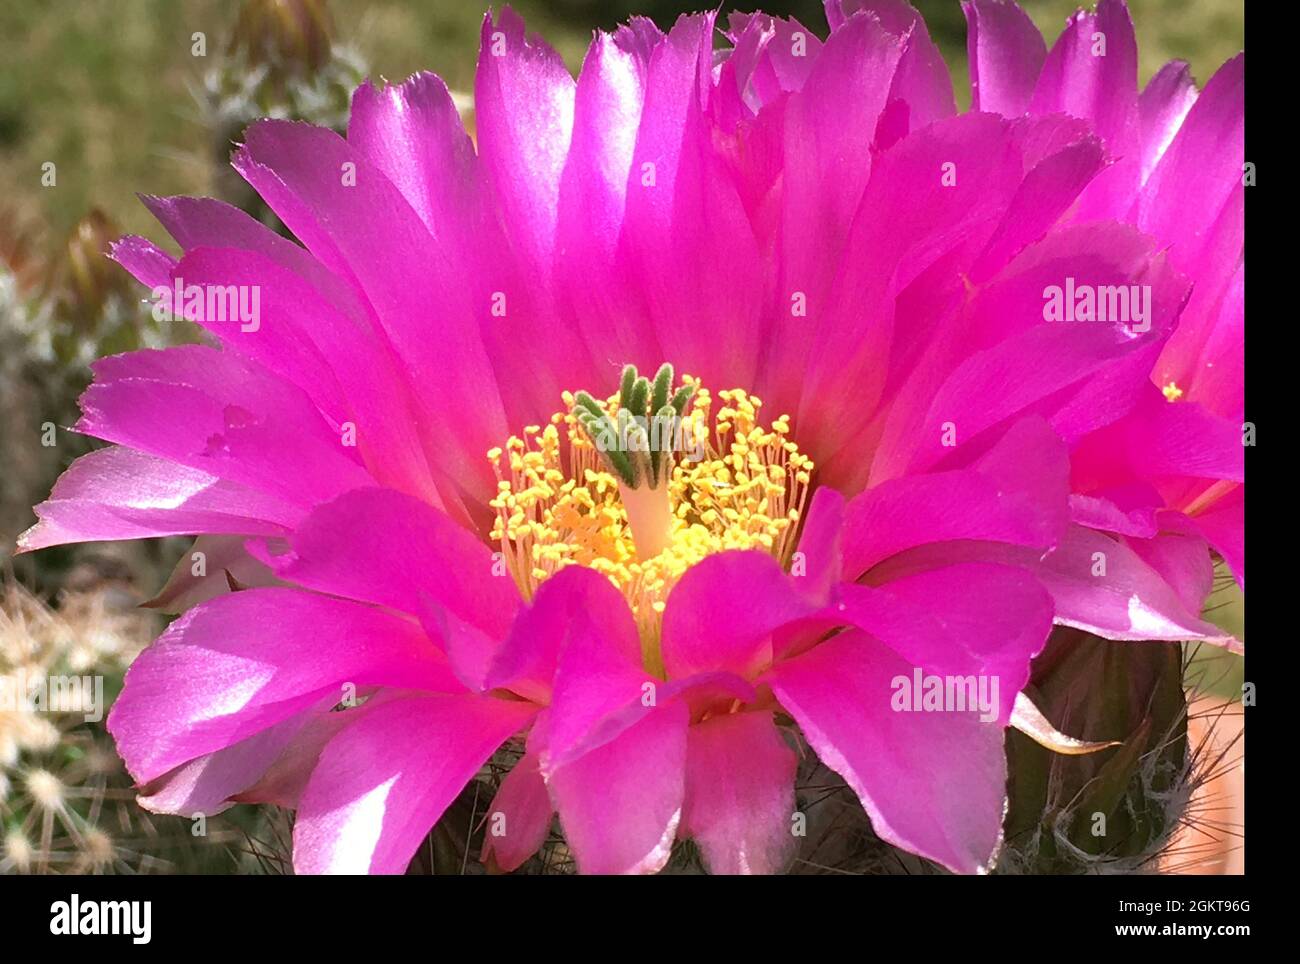 Flowering cactus Echinocereus reichenbachii from Texas - United States. Stock Photo